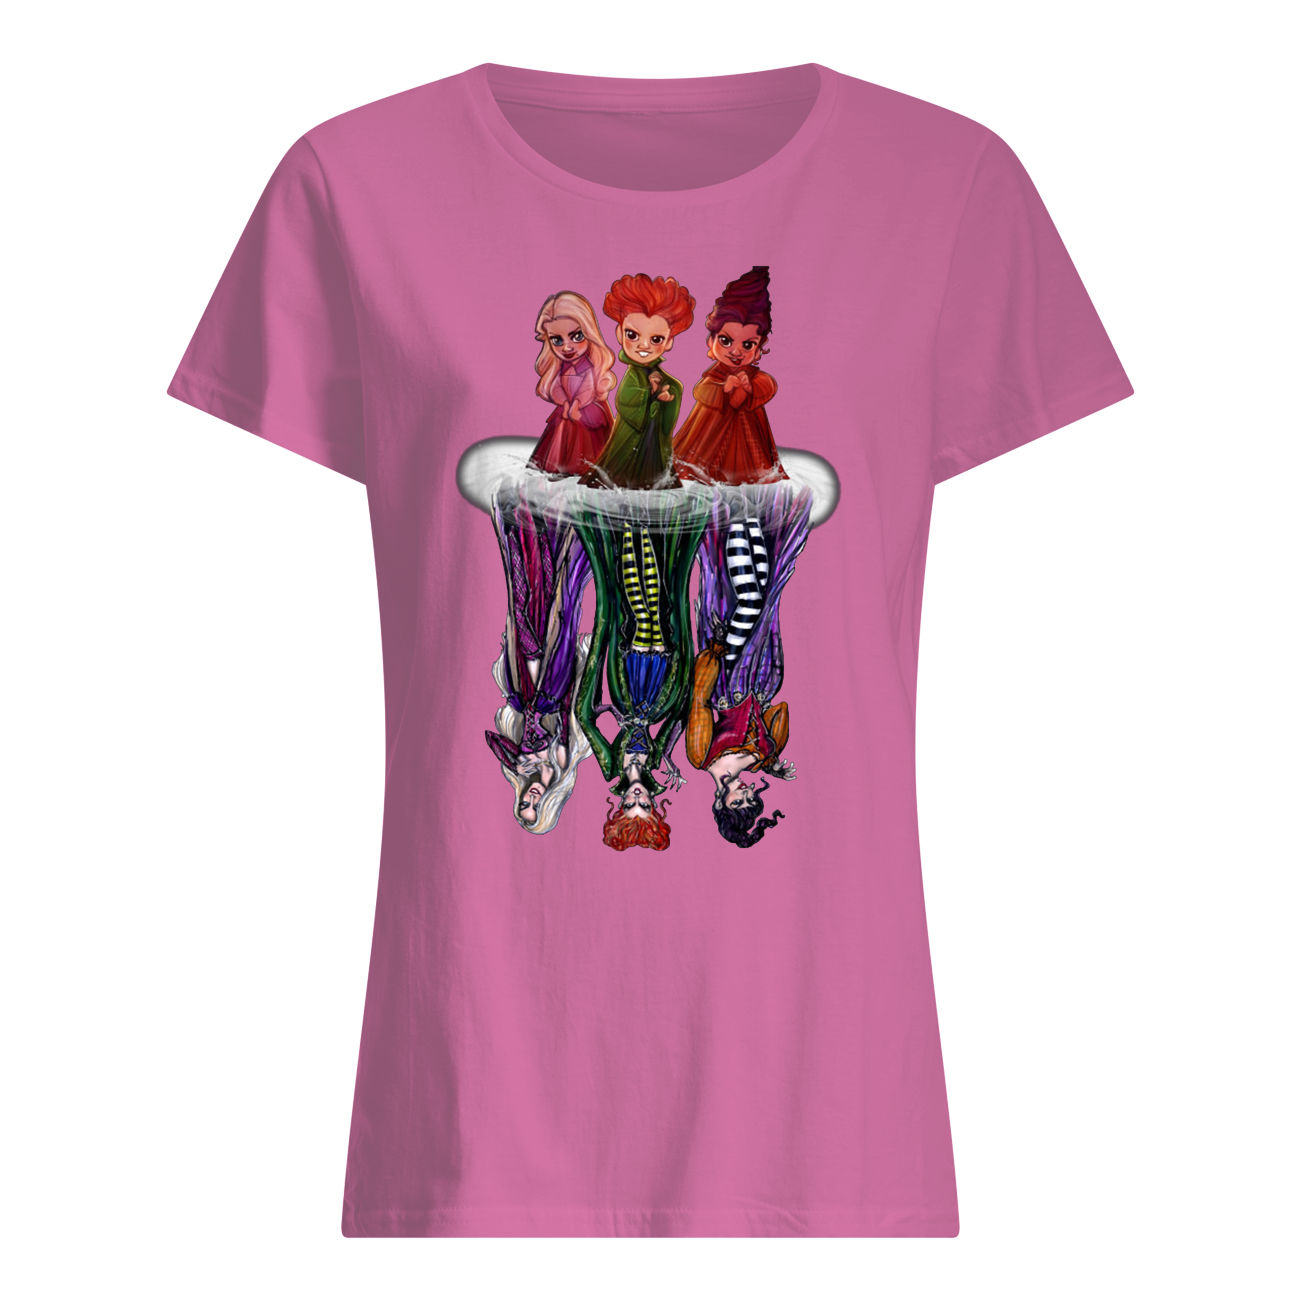 Hocus pocus characters chibi water reflection womens shirt